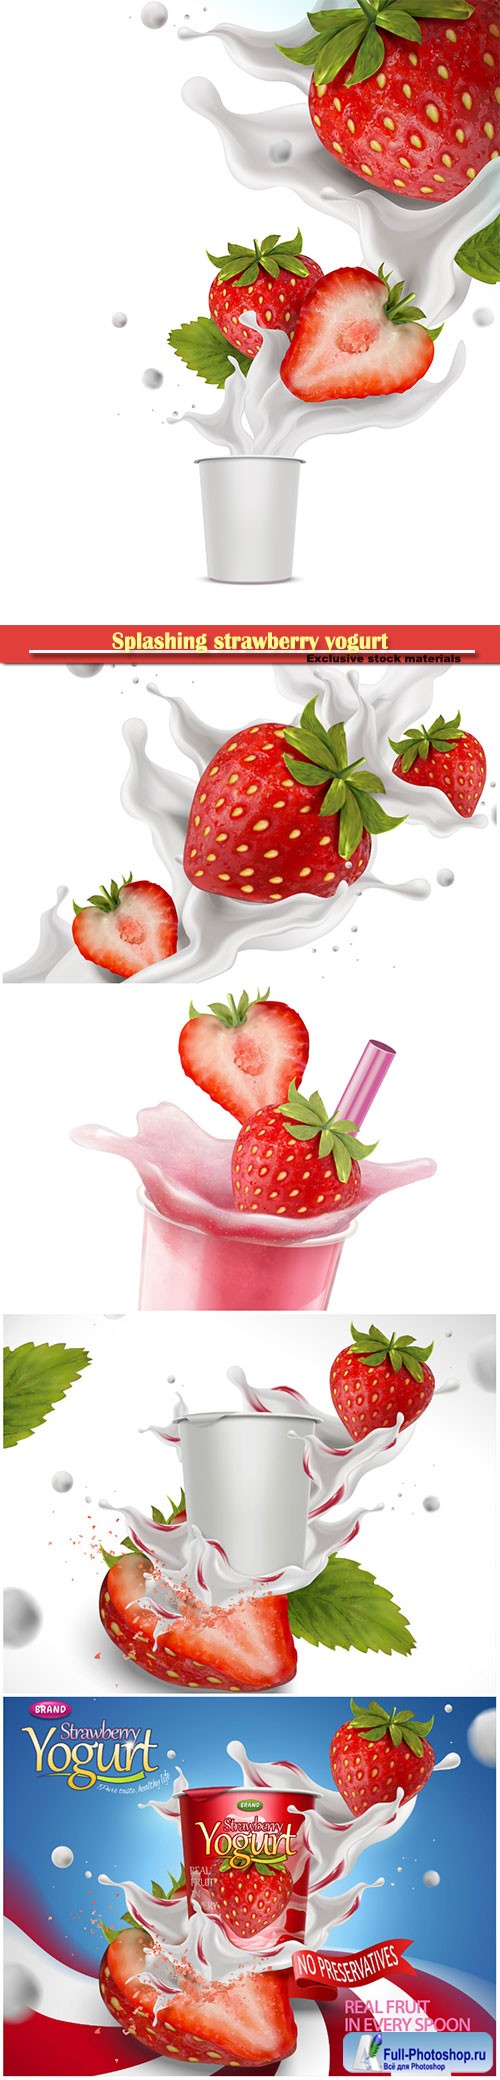 Splashing strawberry yogurt with fresh fruit in 3d illustration